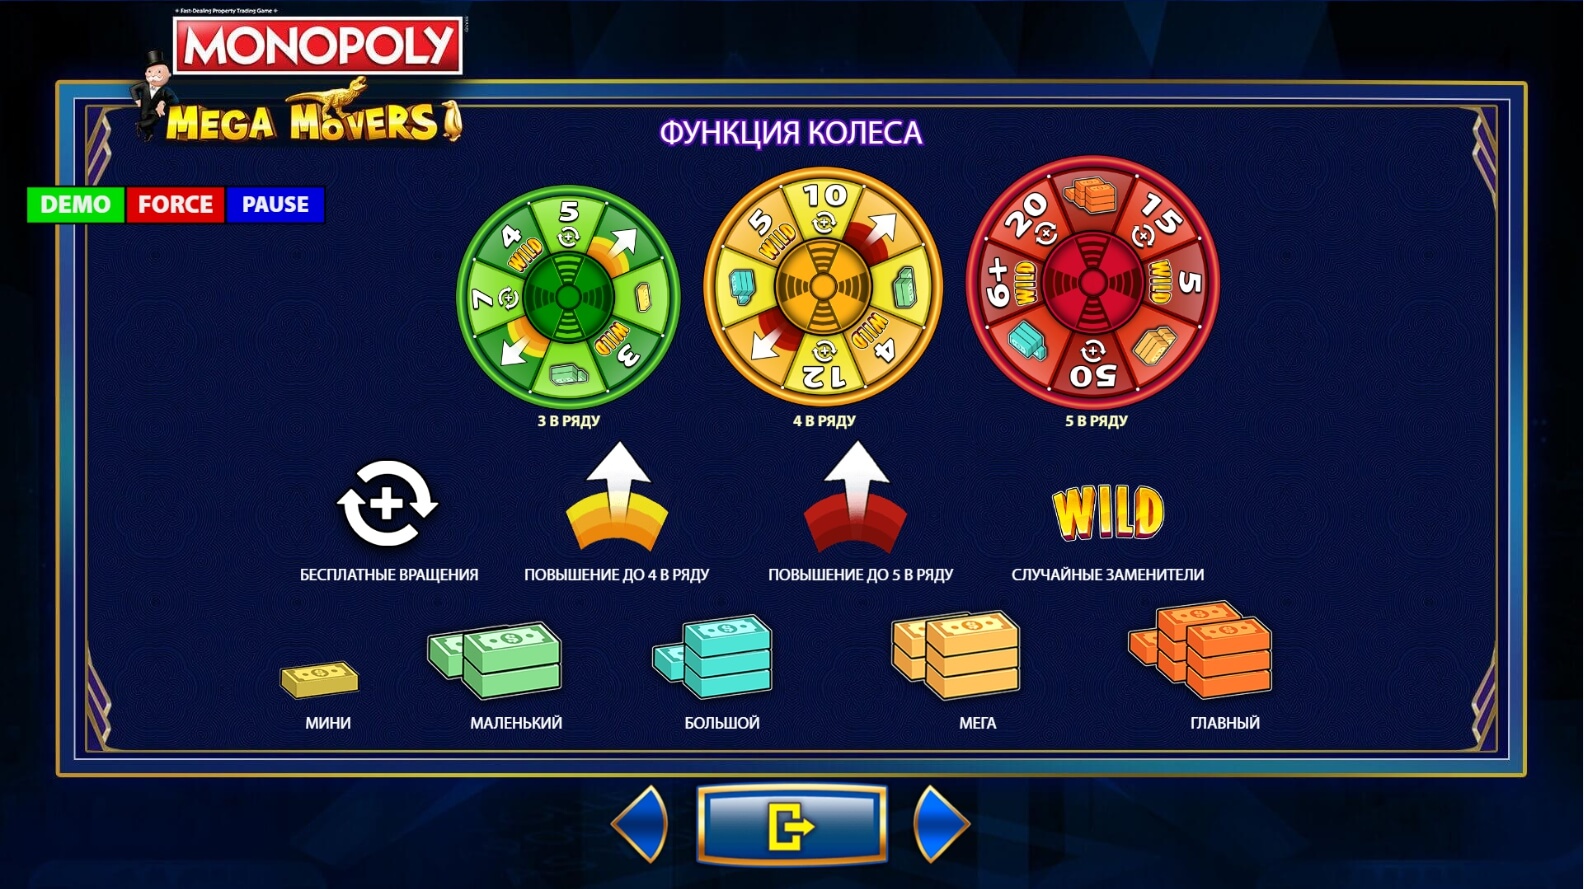 monopoly mega movers slot machine detail image 4